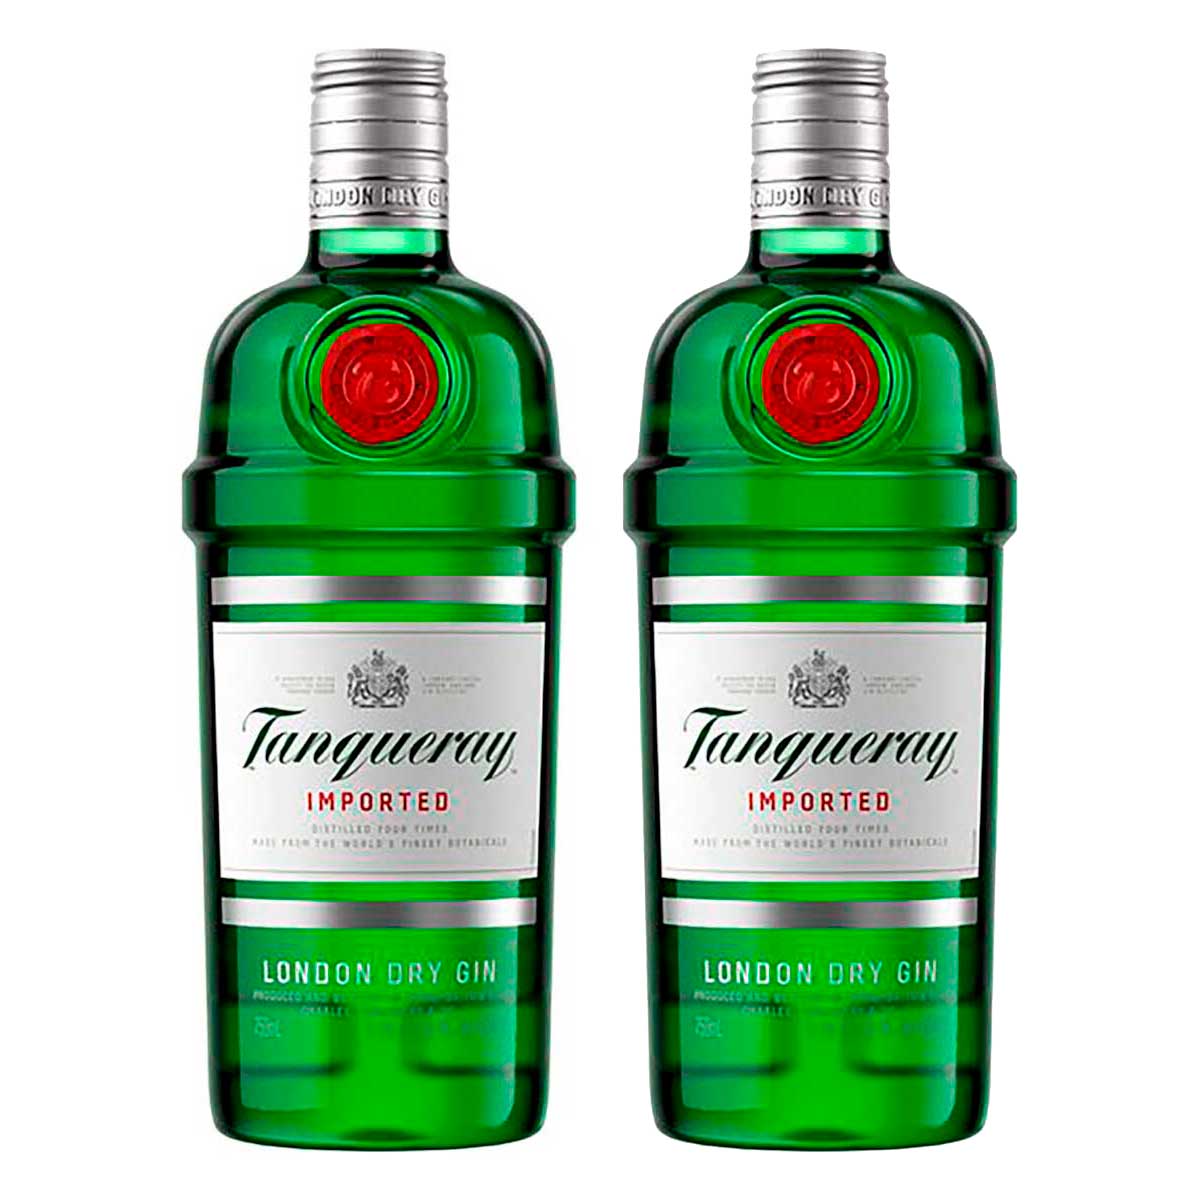 gin-tanqueray-london-dry-750ml-2-unidades-1.jpg